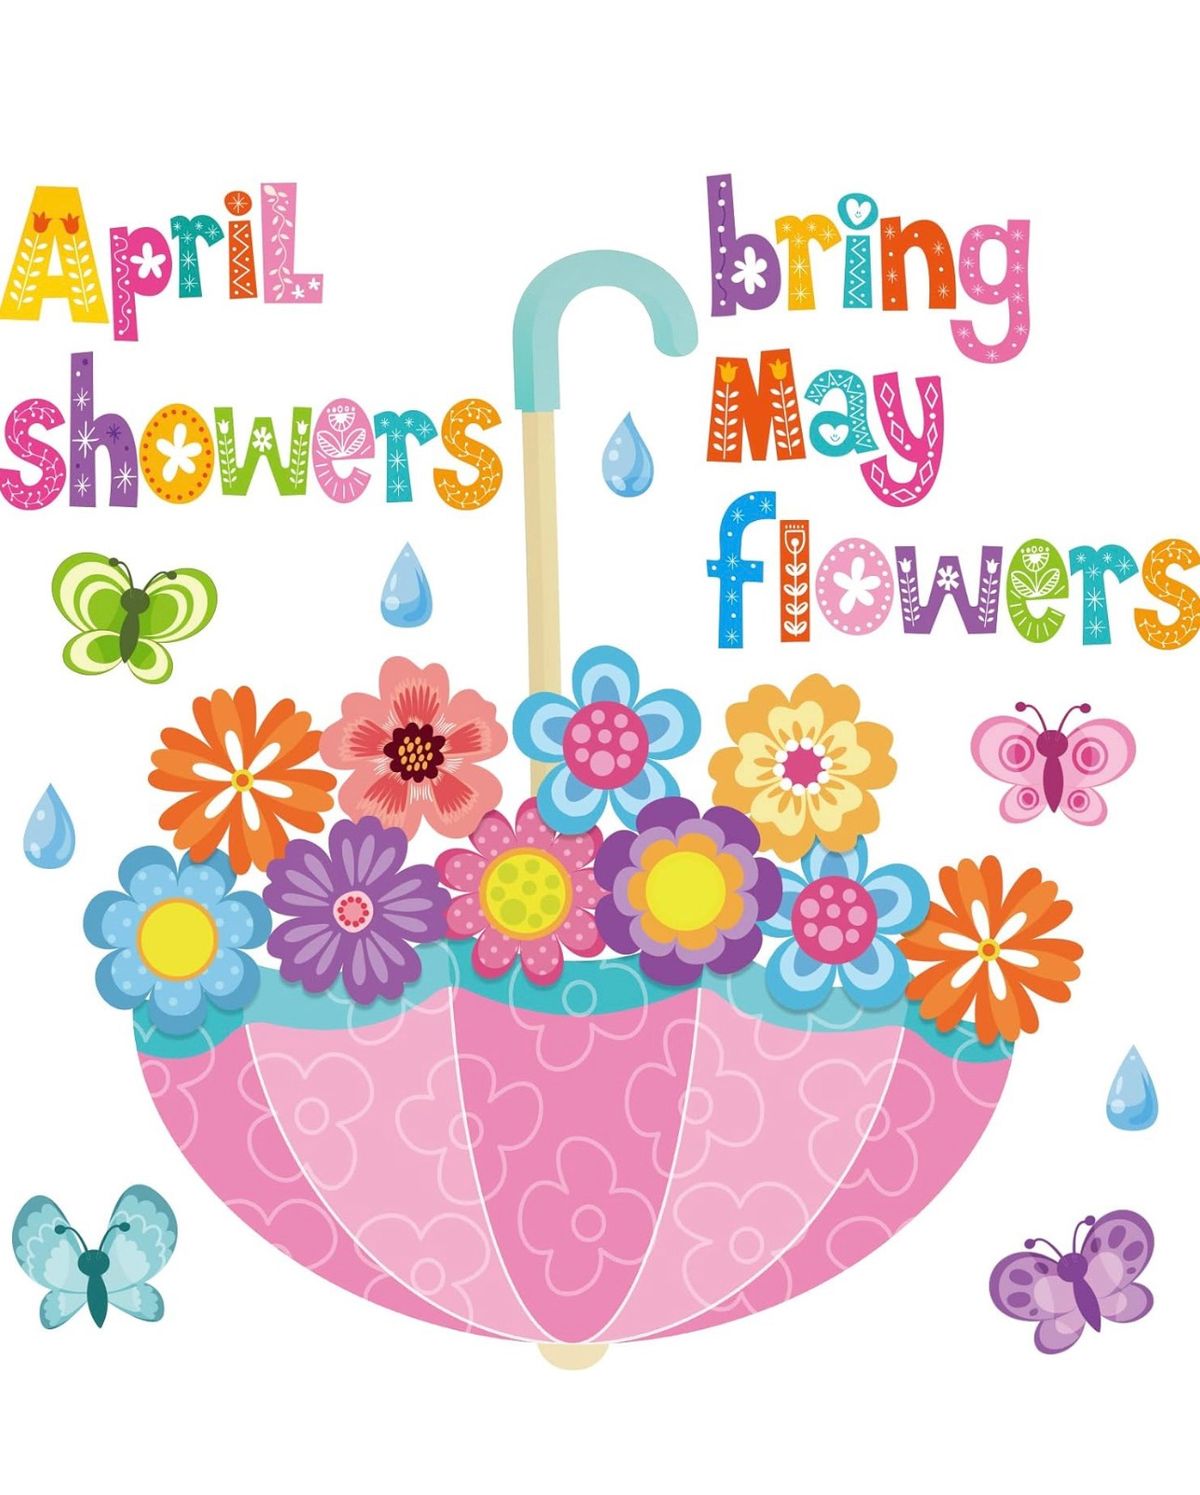 \ud83c\udf27\ufe0f April showers bring May flower\u2019s bazaar \ud83c\udf38 